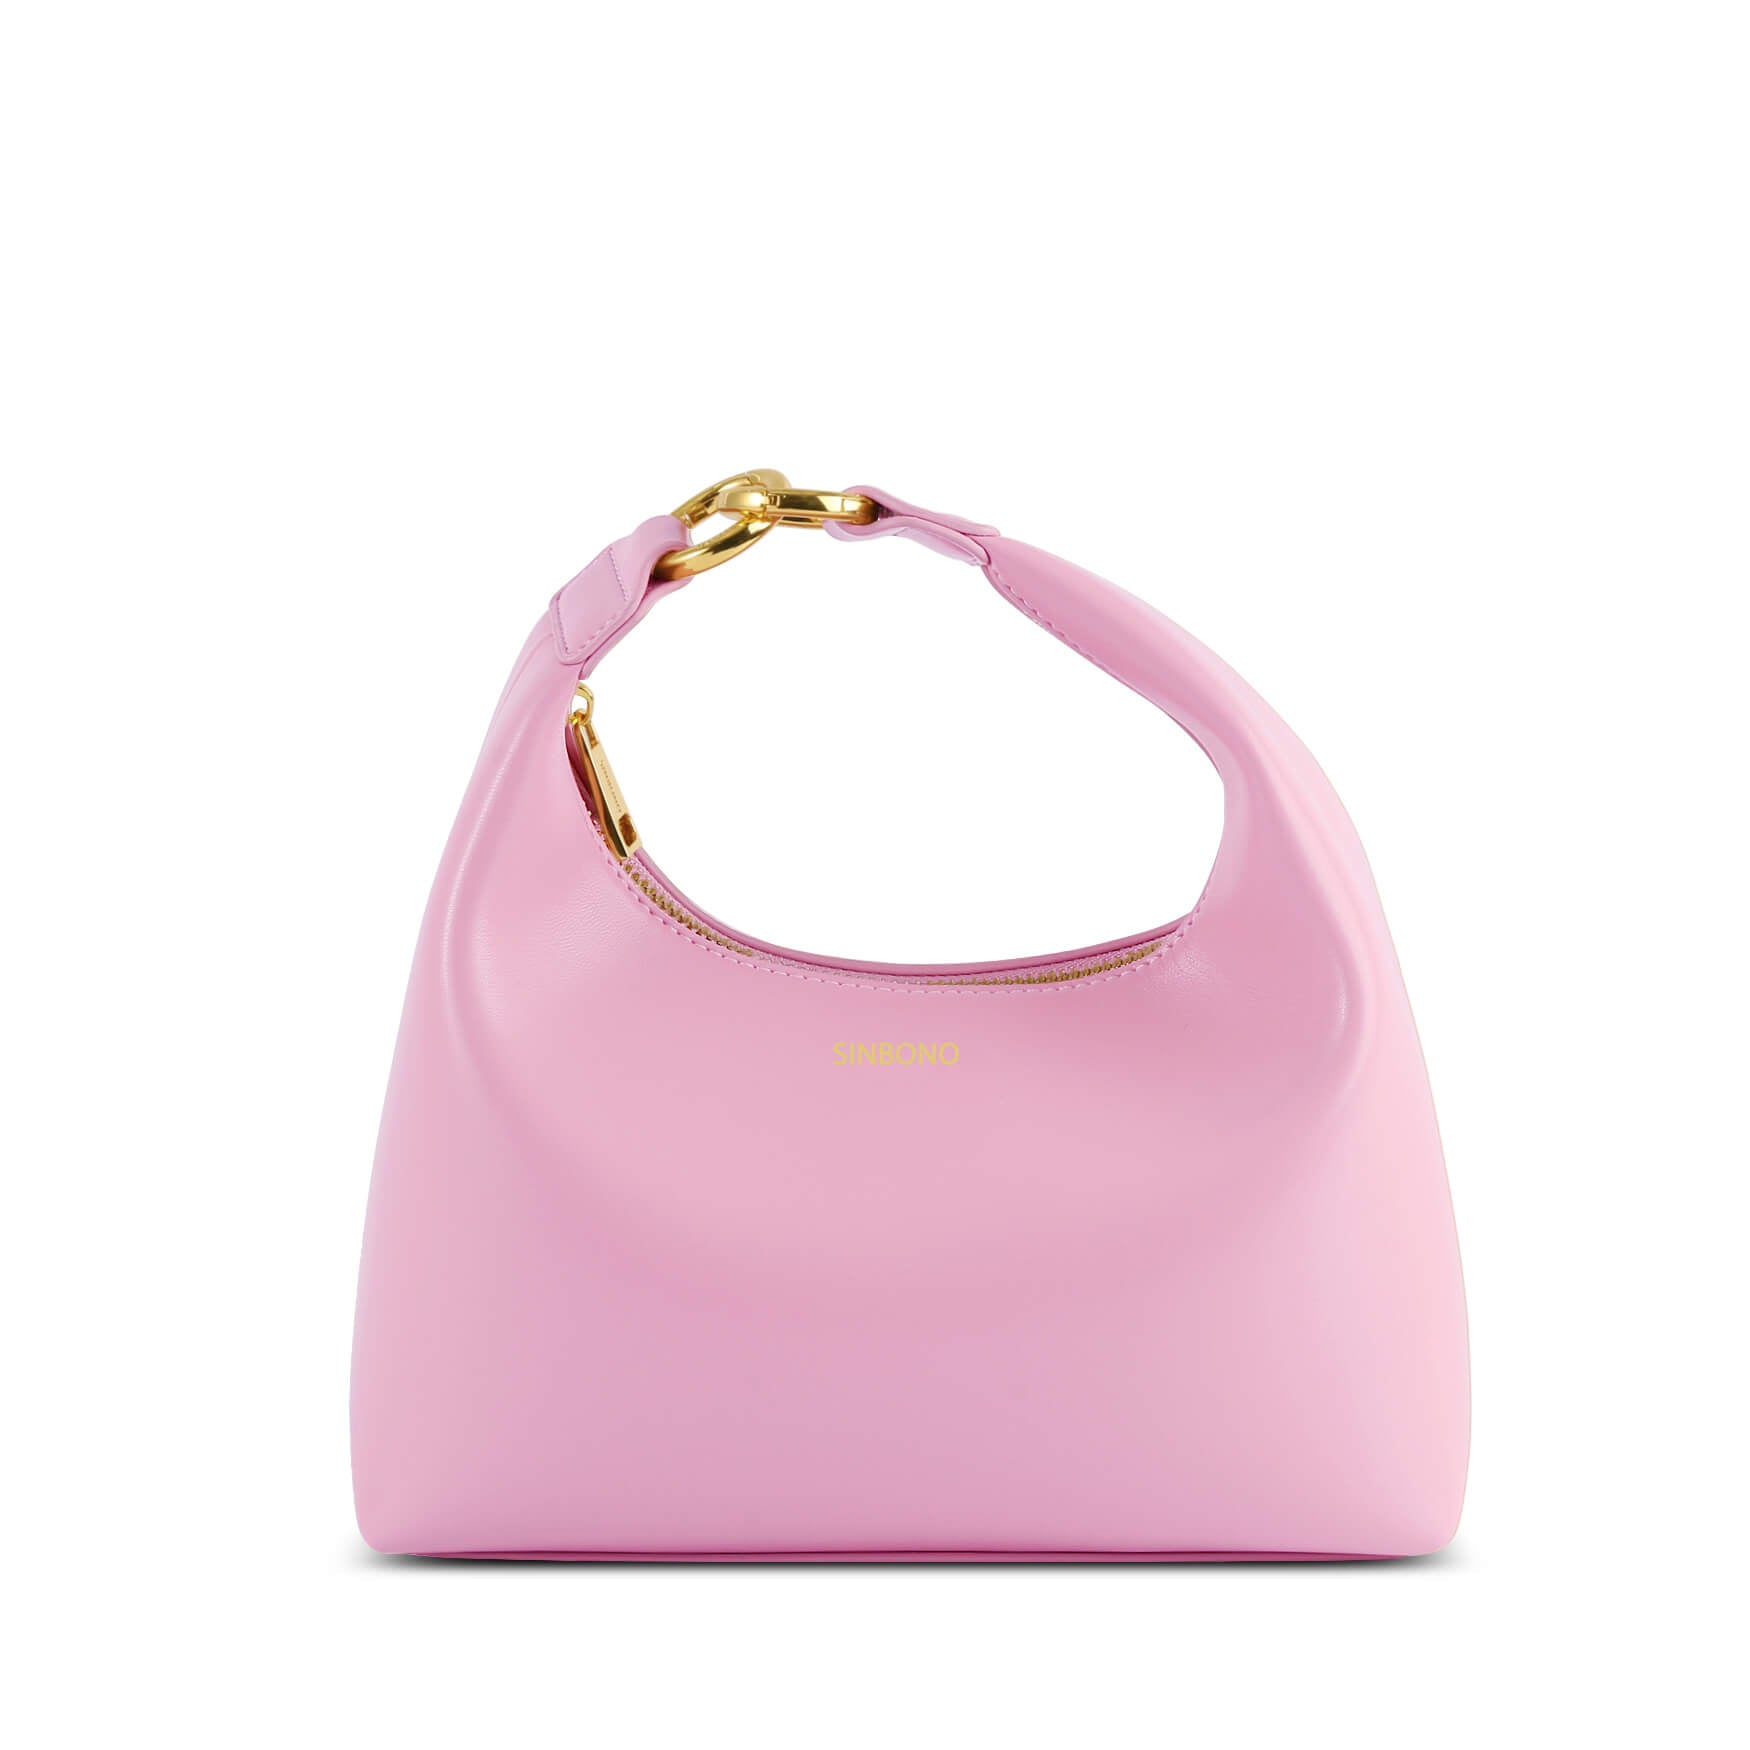 SINBONO Pink Shoulder Satchel Crossbody Women's Handbags